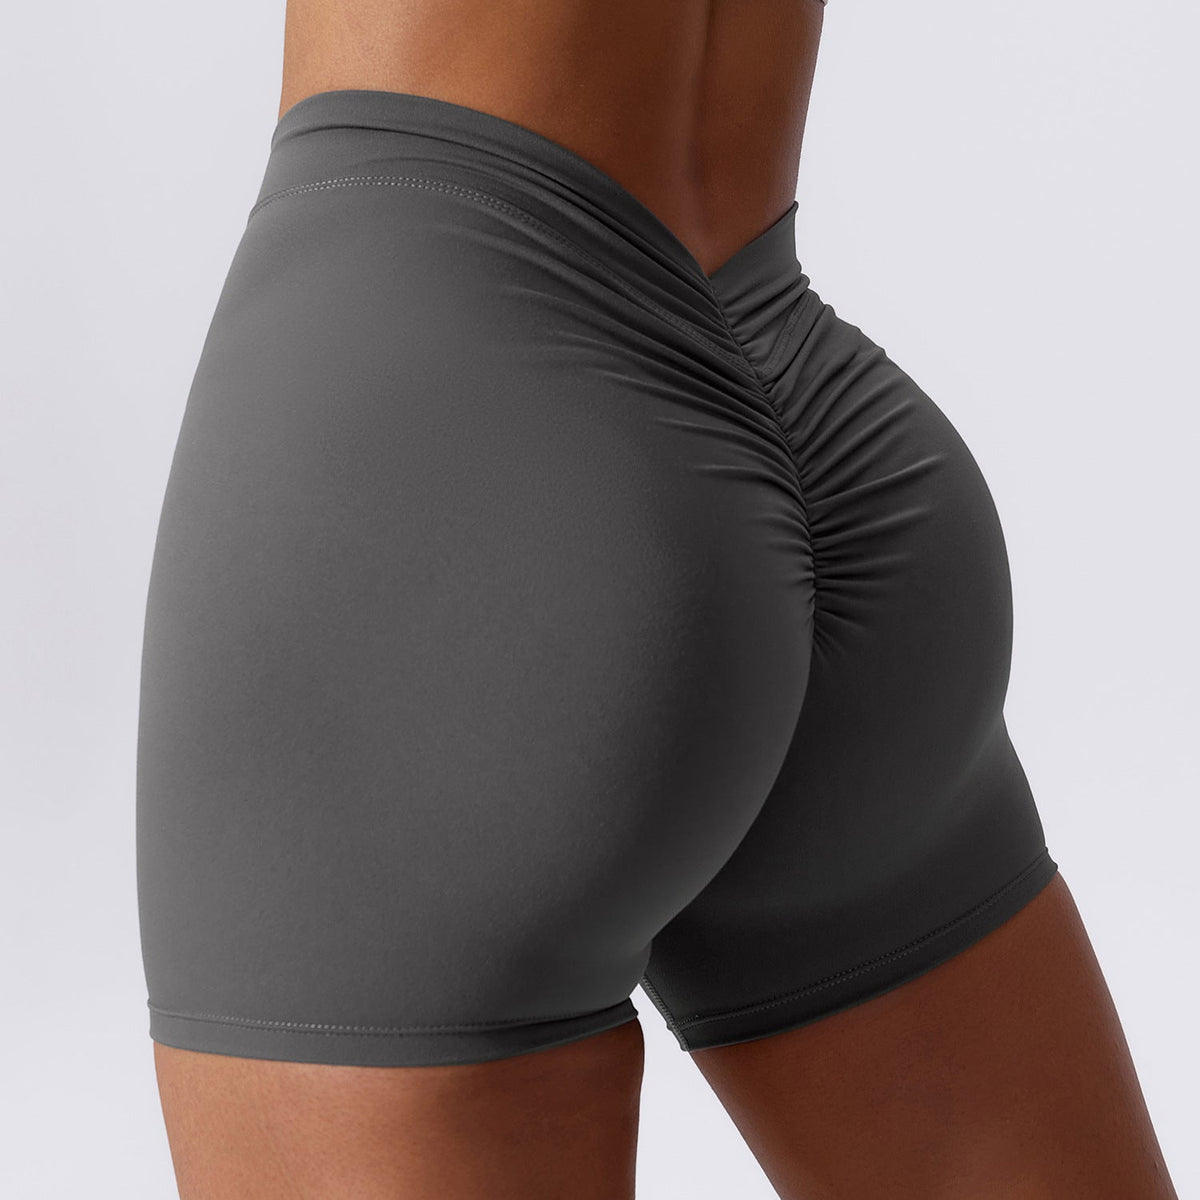 hiruce Women Seamless Sports Crinkle Butt Lift Yoga Short Pants